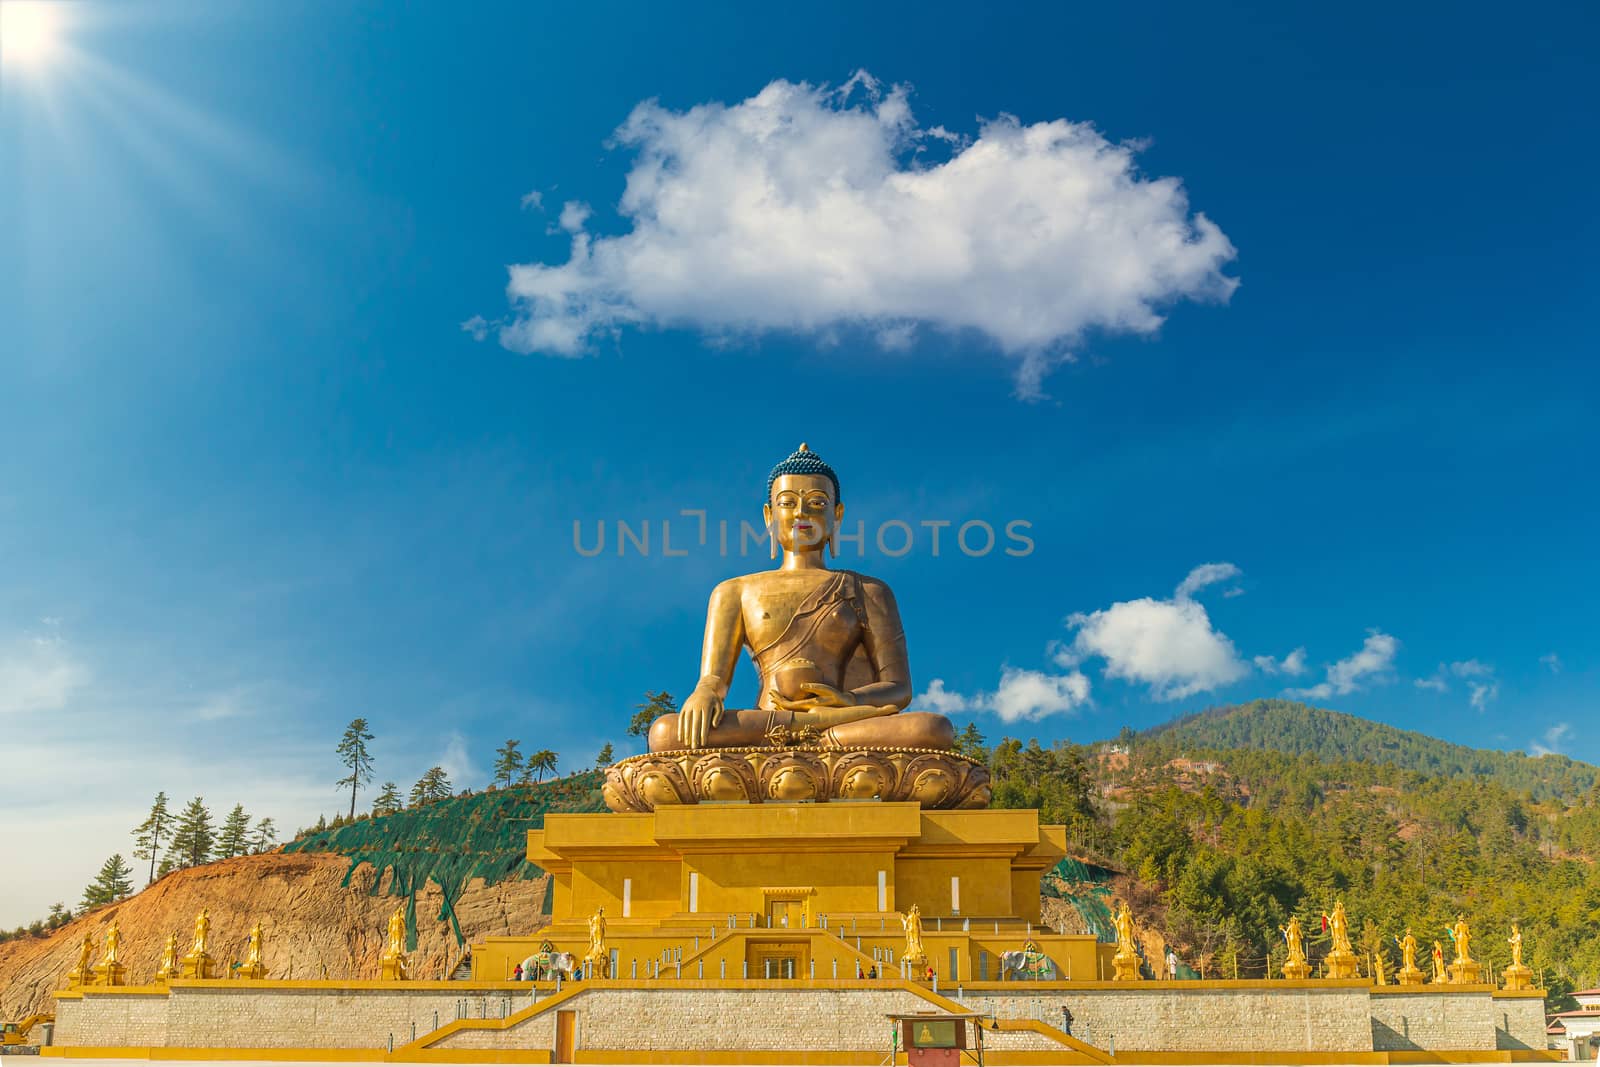 Amazing giant Buddha sculpture in the capital city of Bhutan